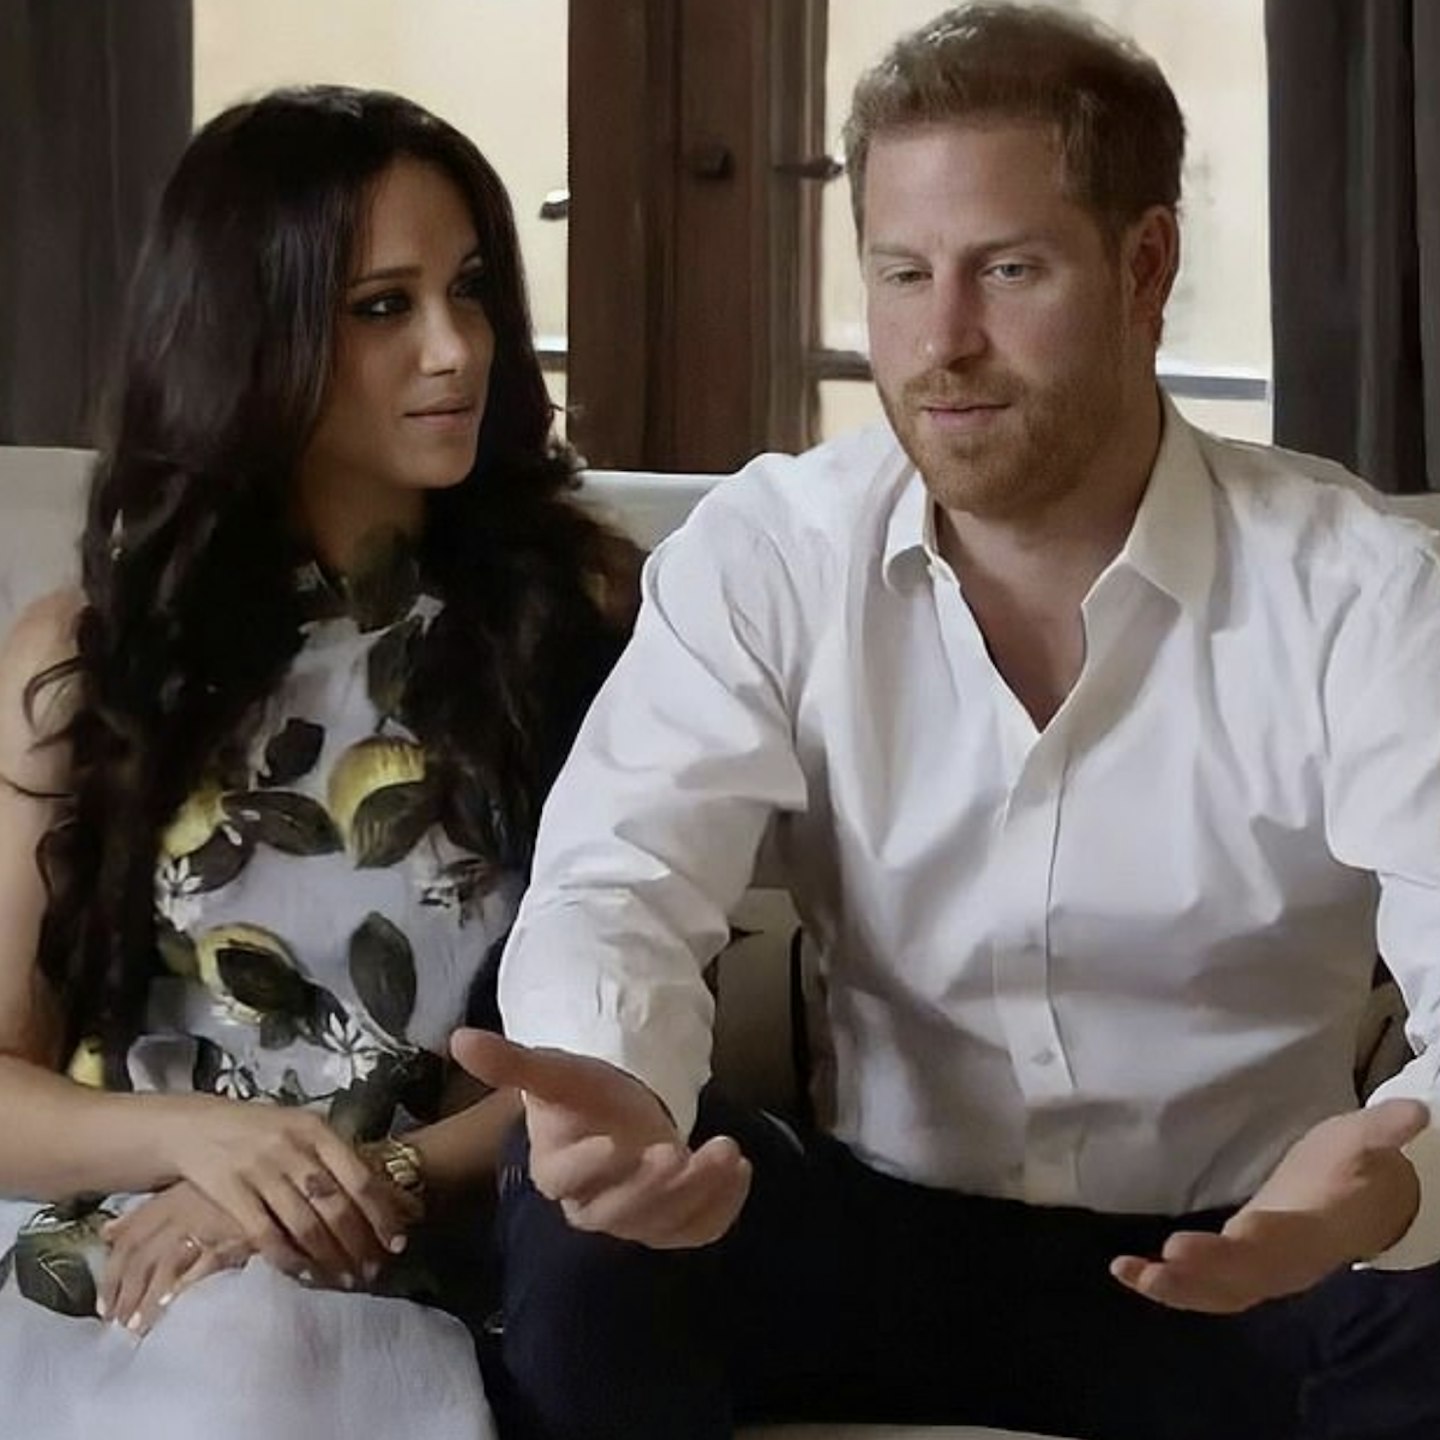 Meghan Markle wears flowery dress and sits next to Prince Harry